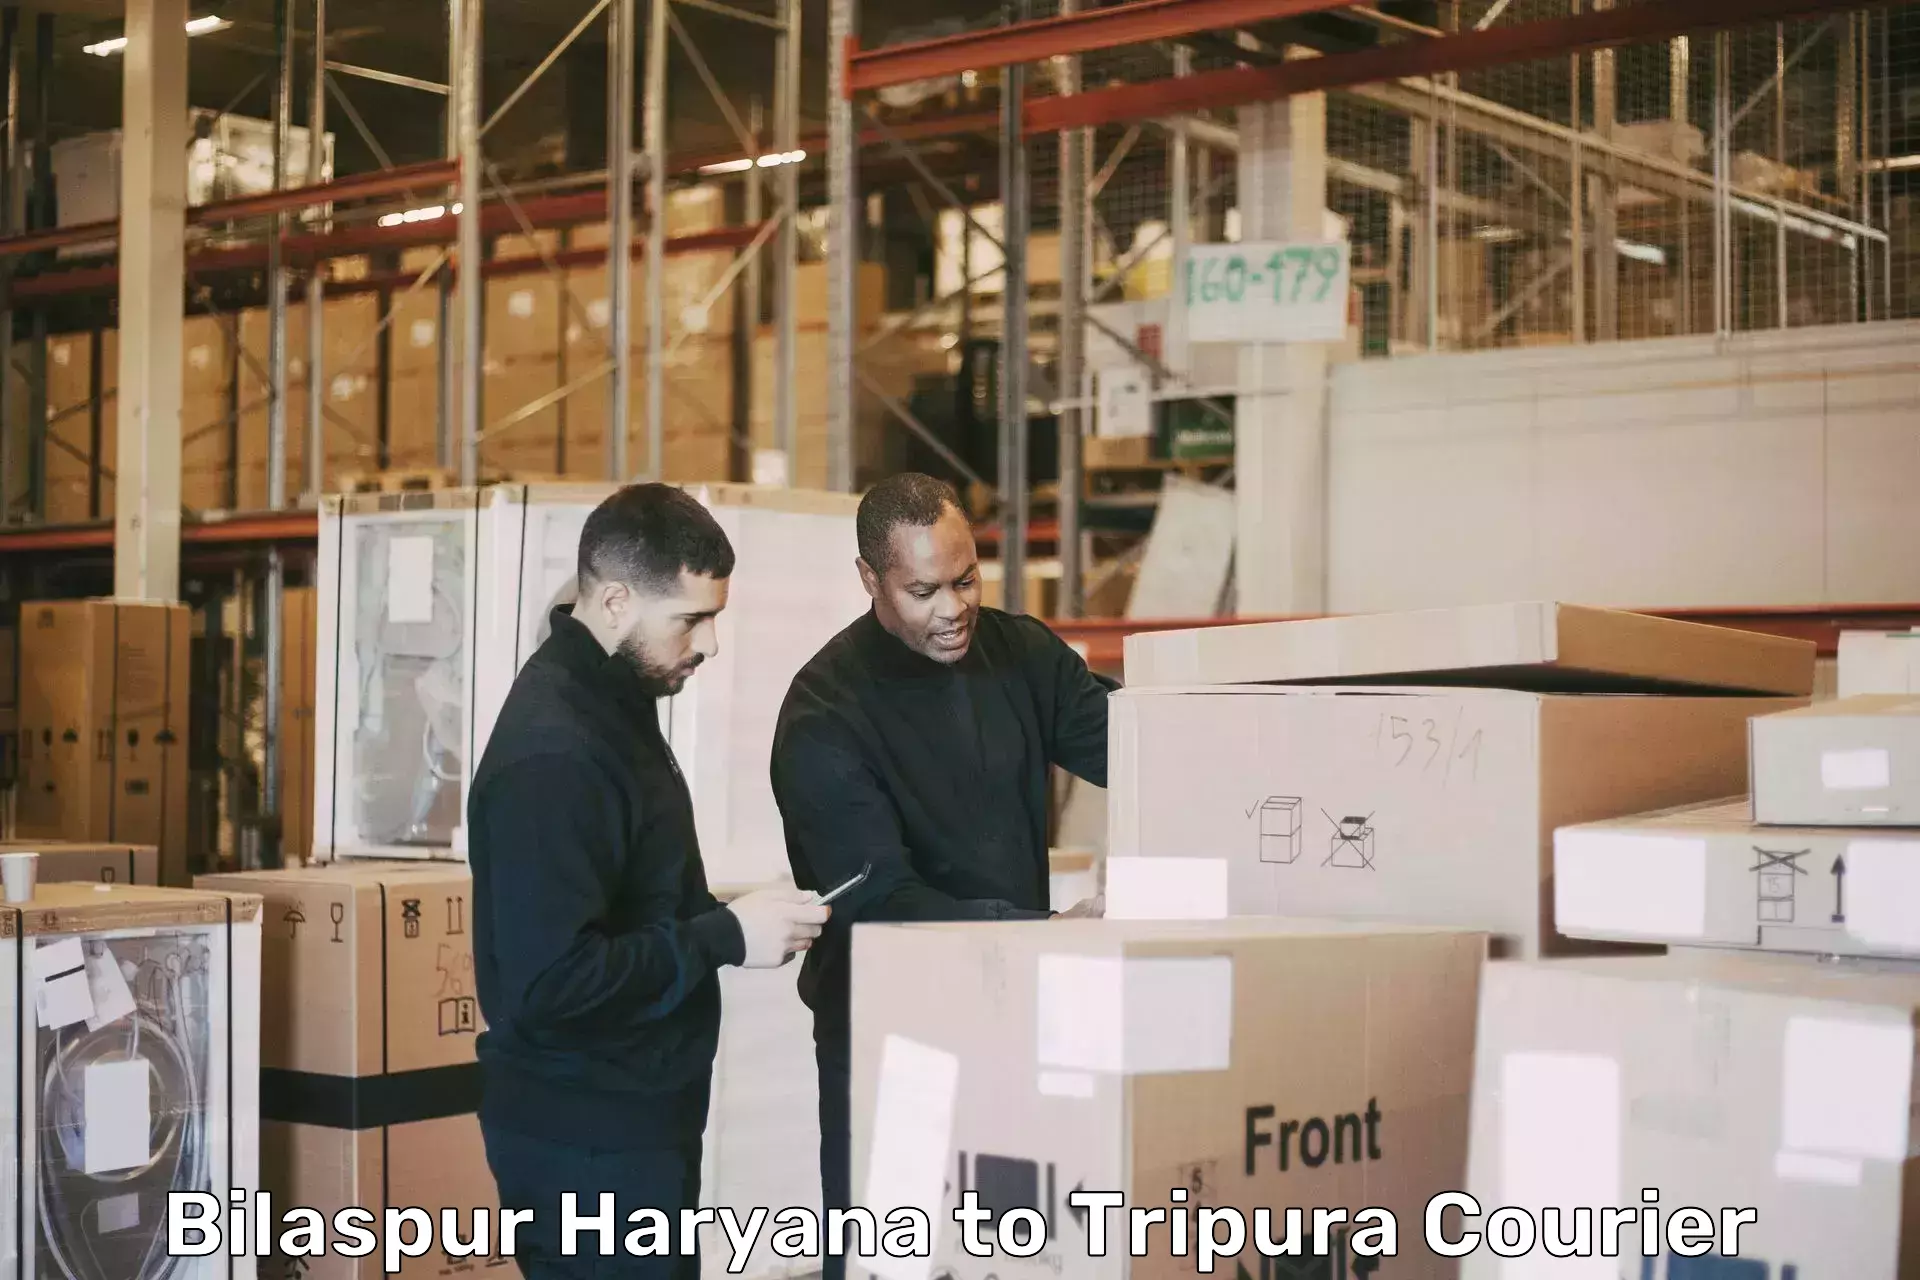 Moving and storage services Bilaspur Haryana to Udaipur Tripura